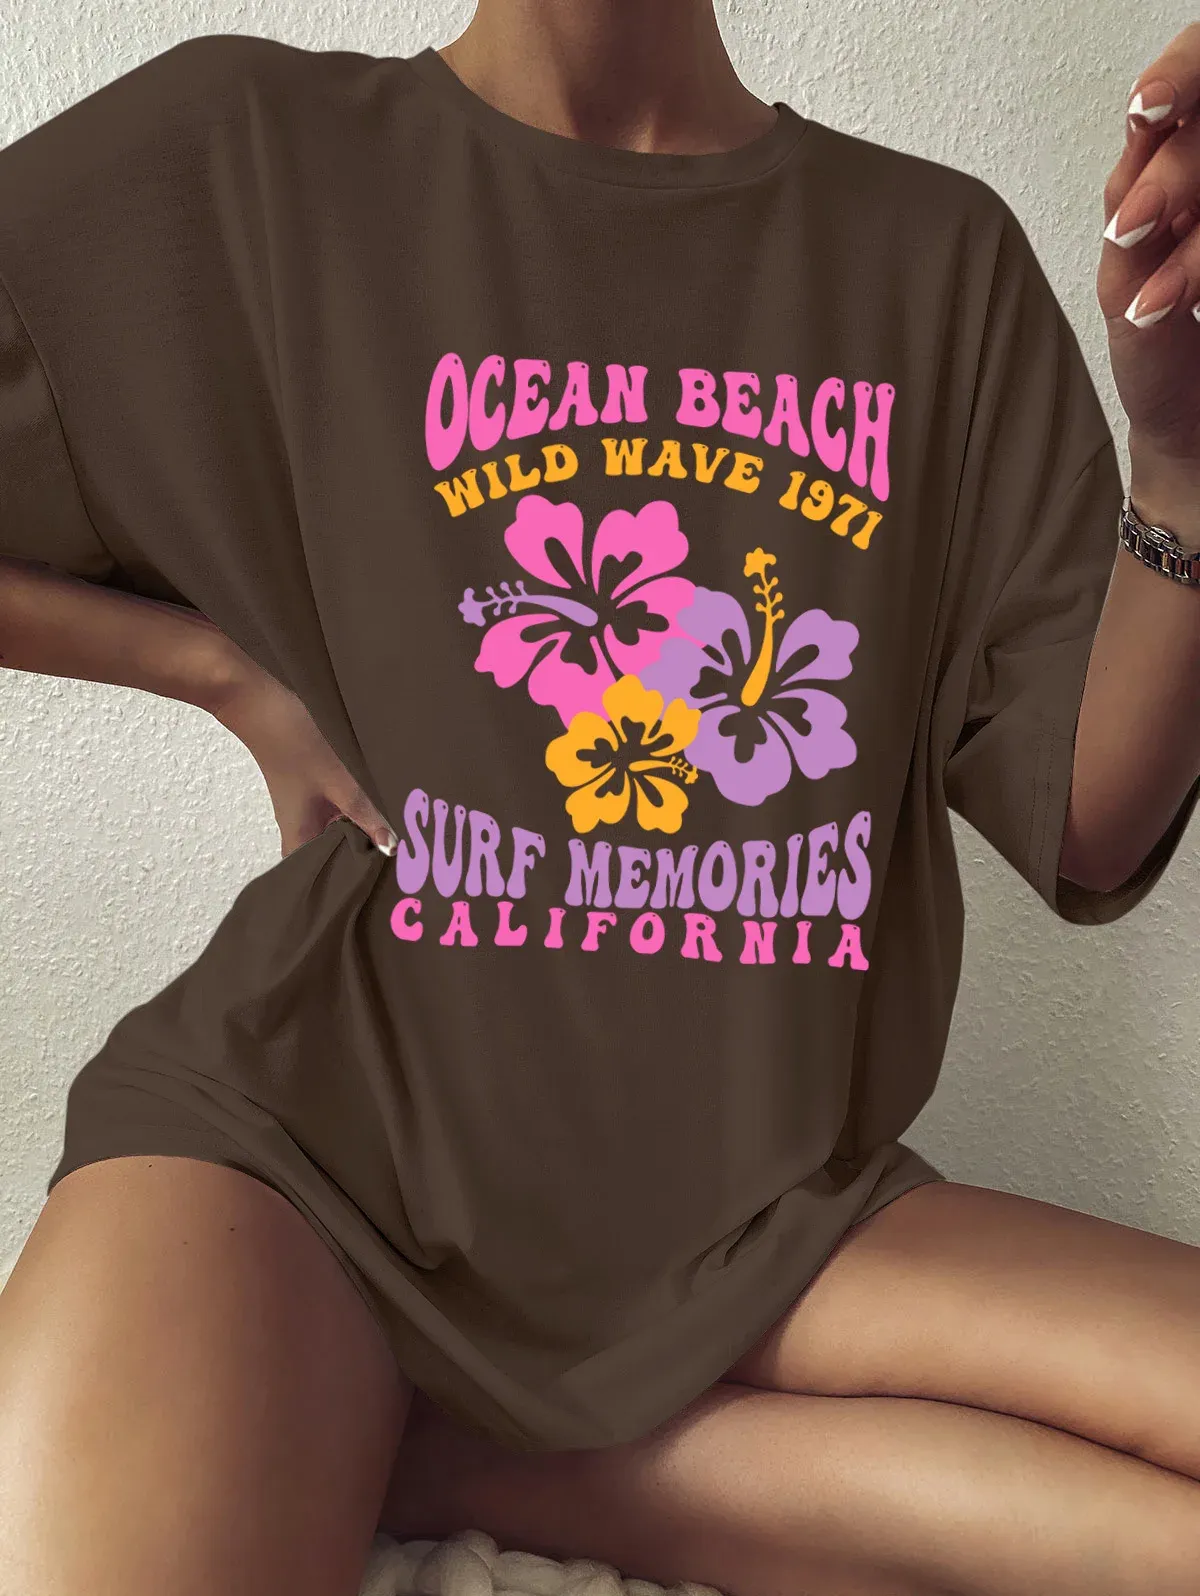 T-shirt Ocean Beach Wild Wave 1971 Surf Memories Overfised Tshirt Letni styl luźne koszulki kobiety